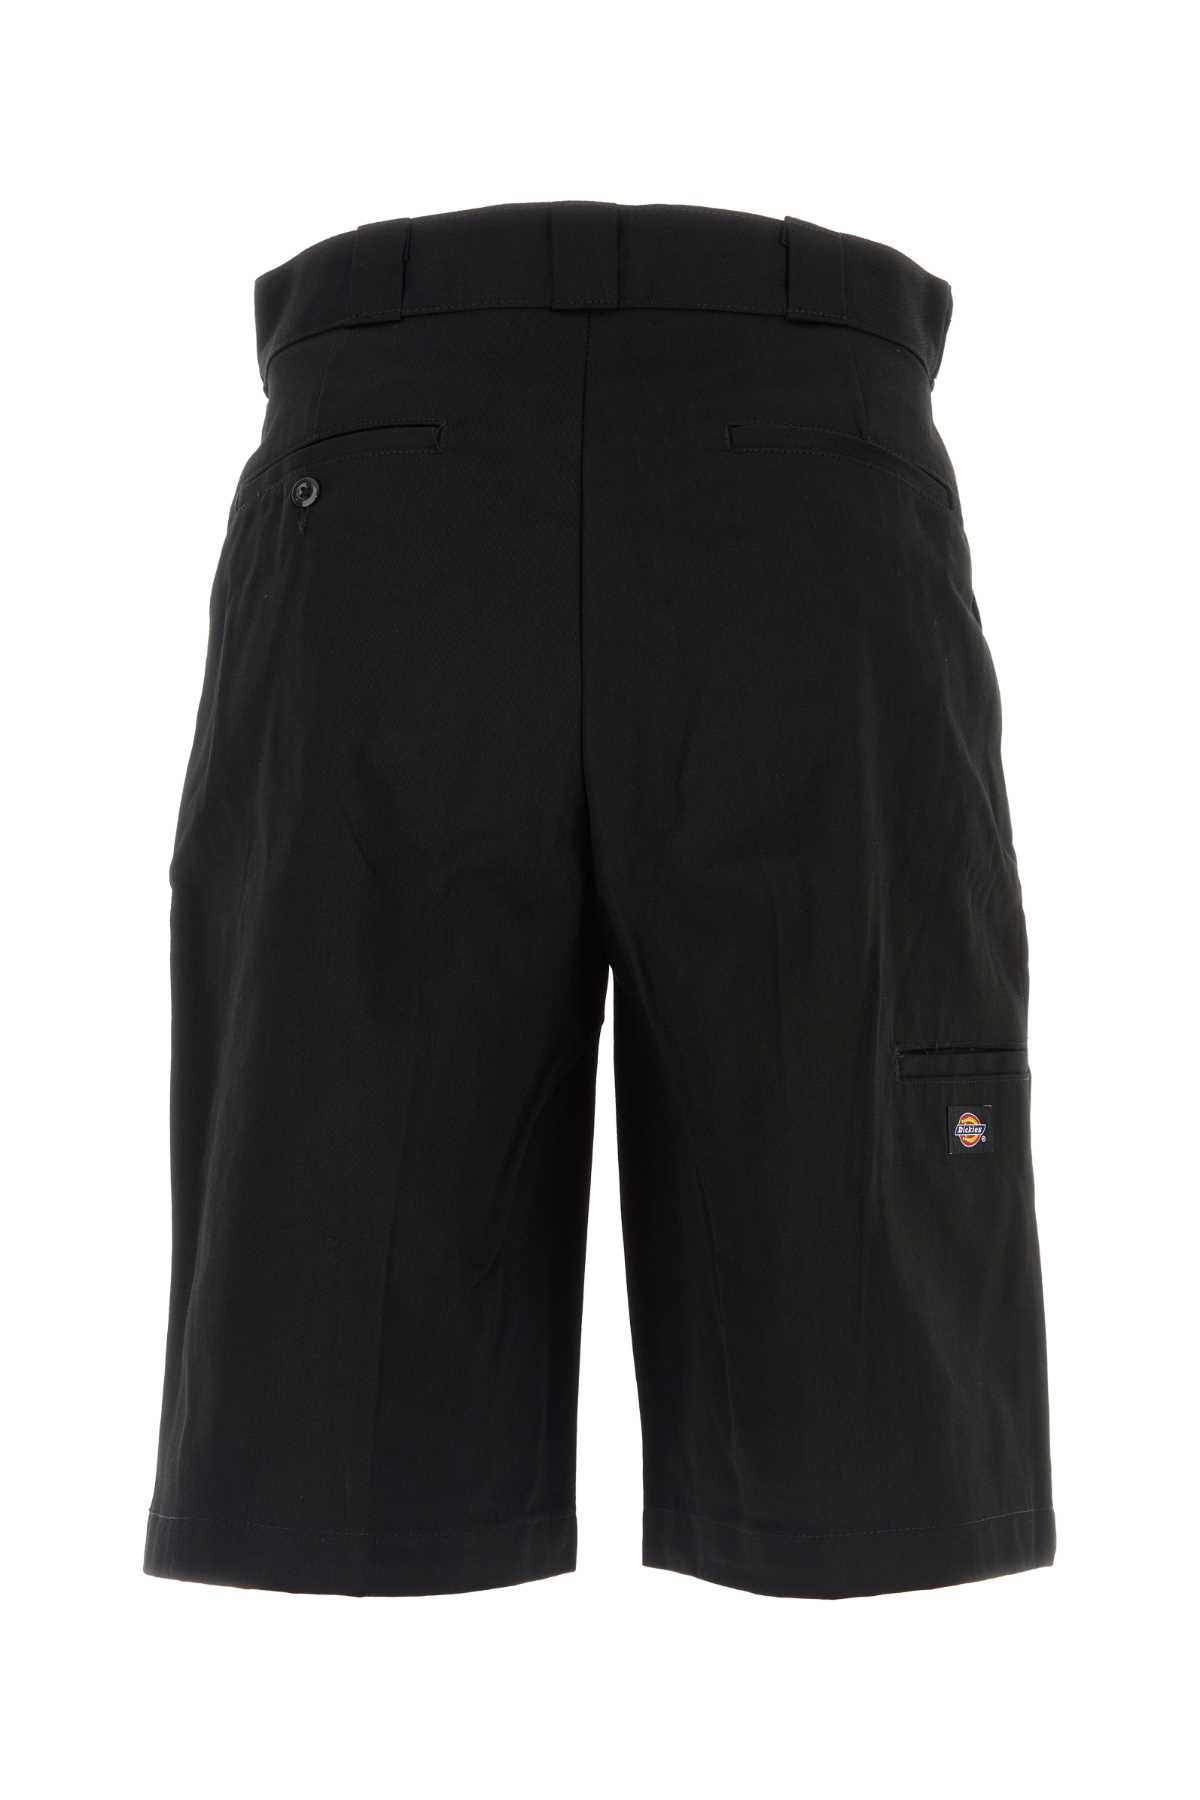 Dickies Black Polyester Blend Bermuda Shorts